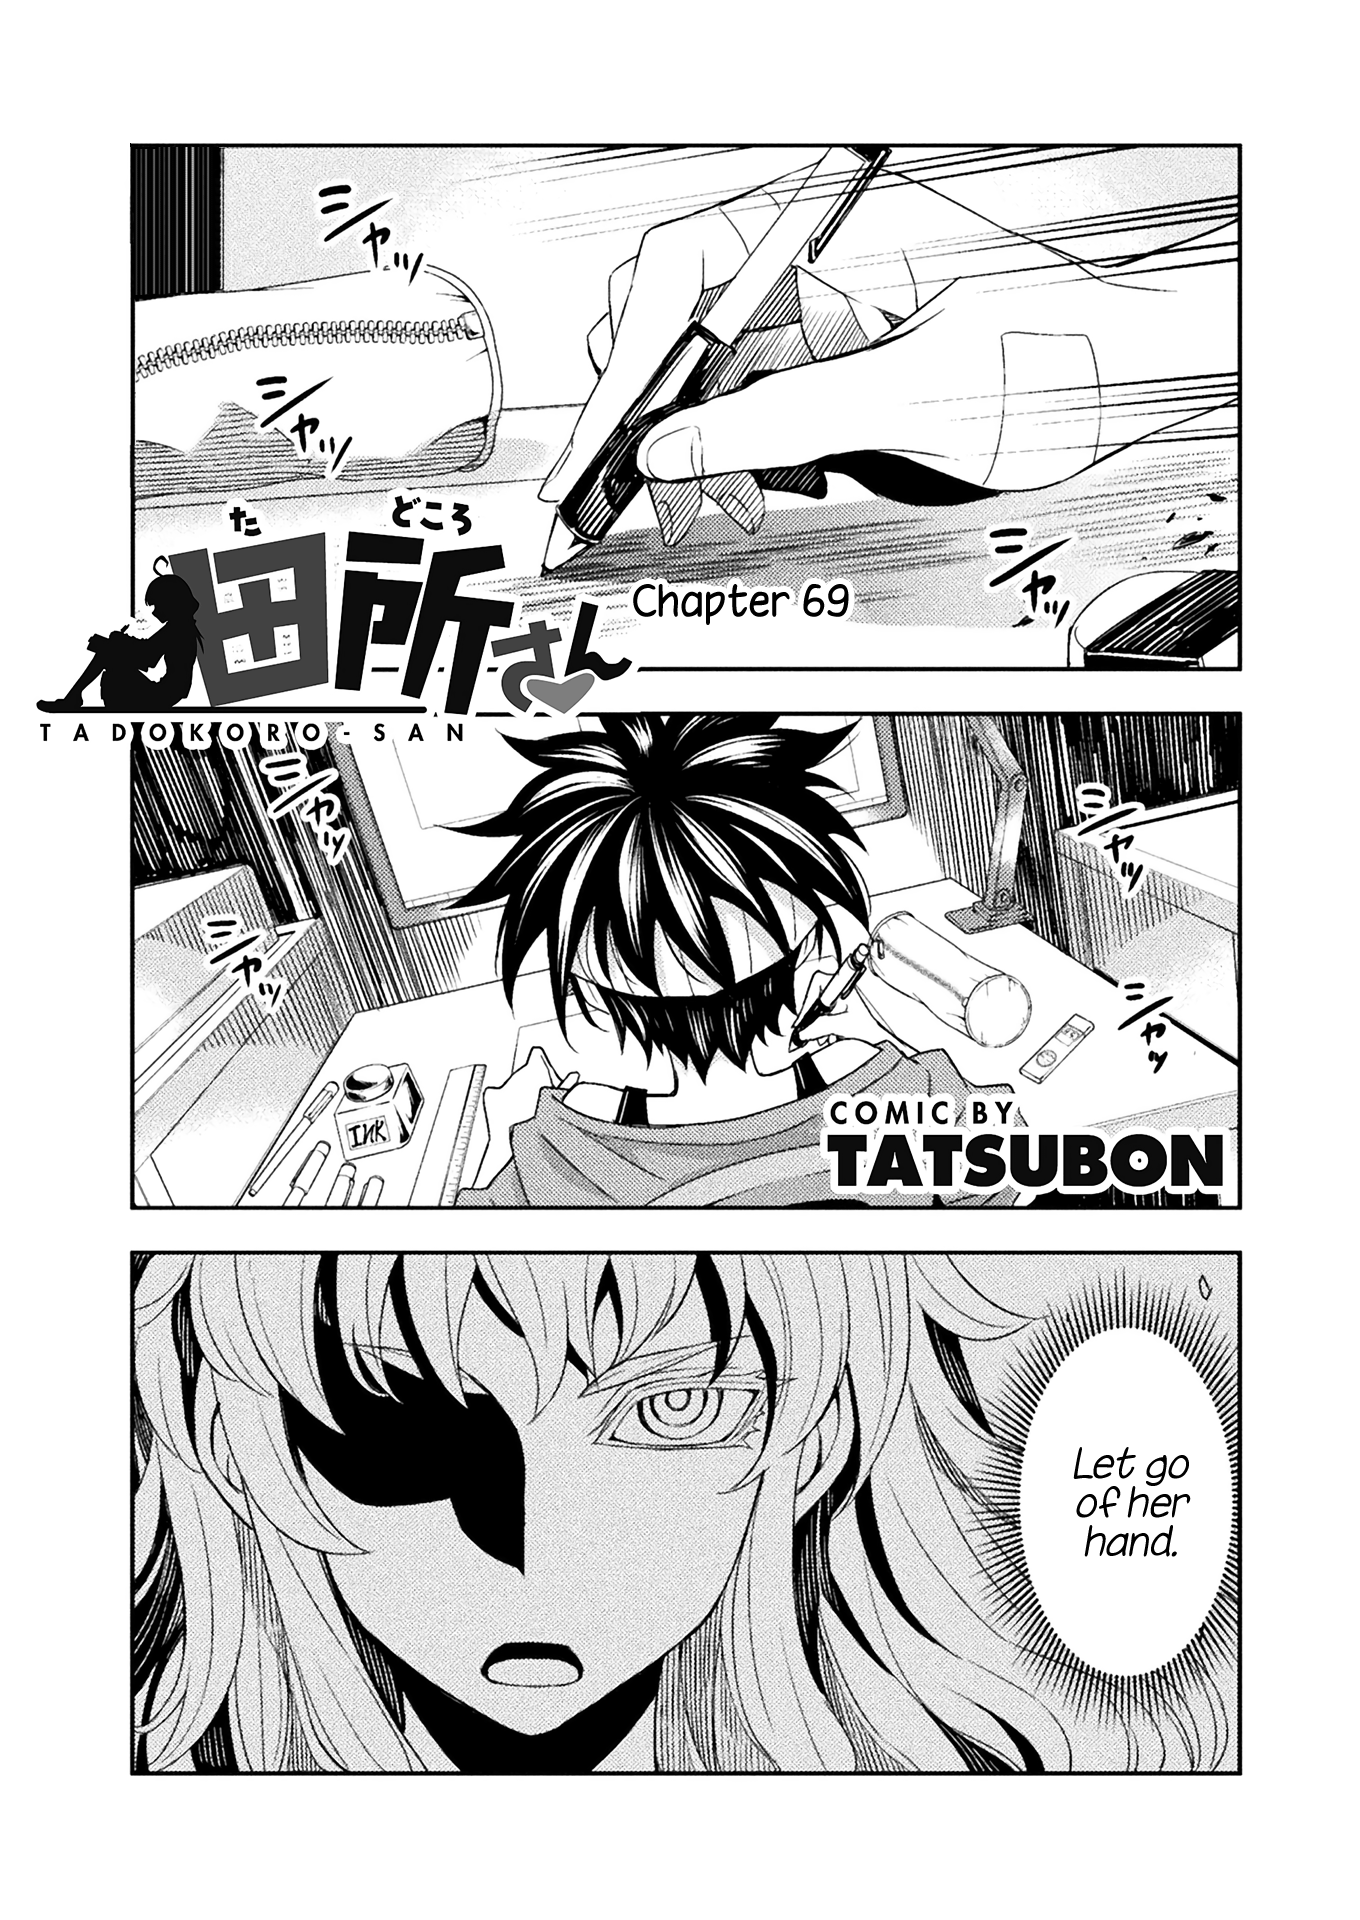 Tadokoro-San (Tatsubon) - Page 1